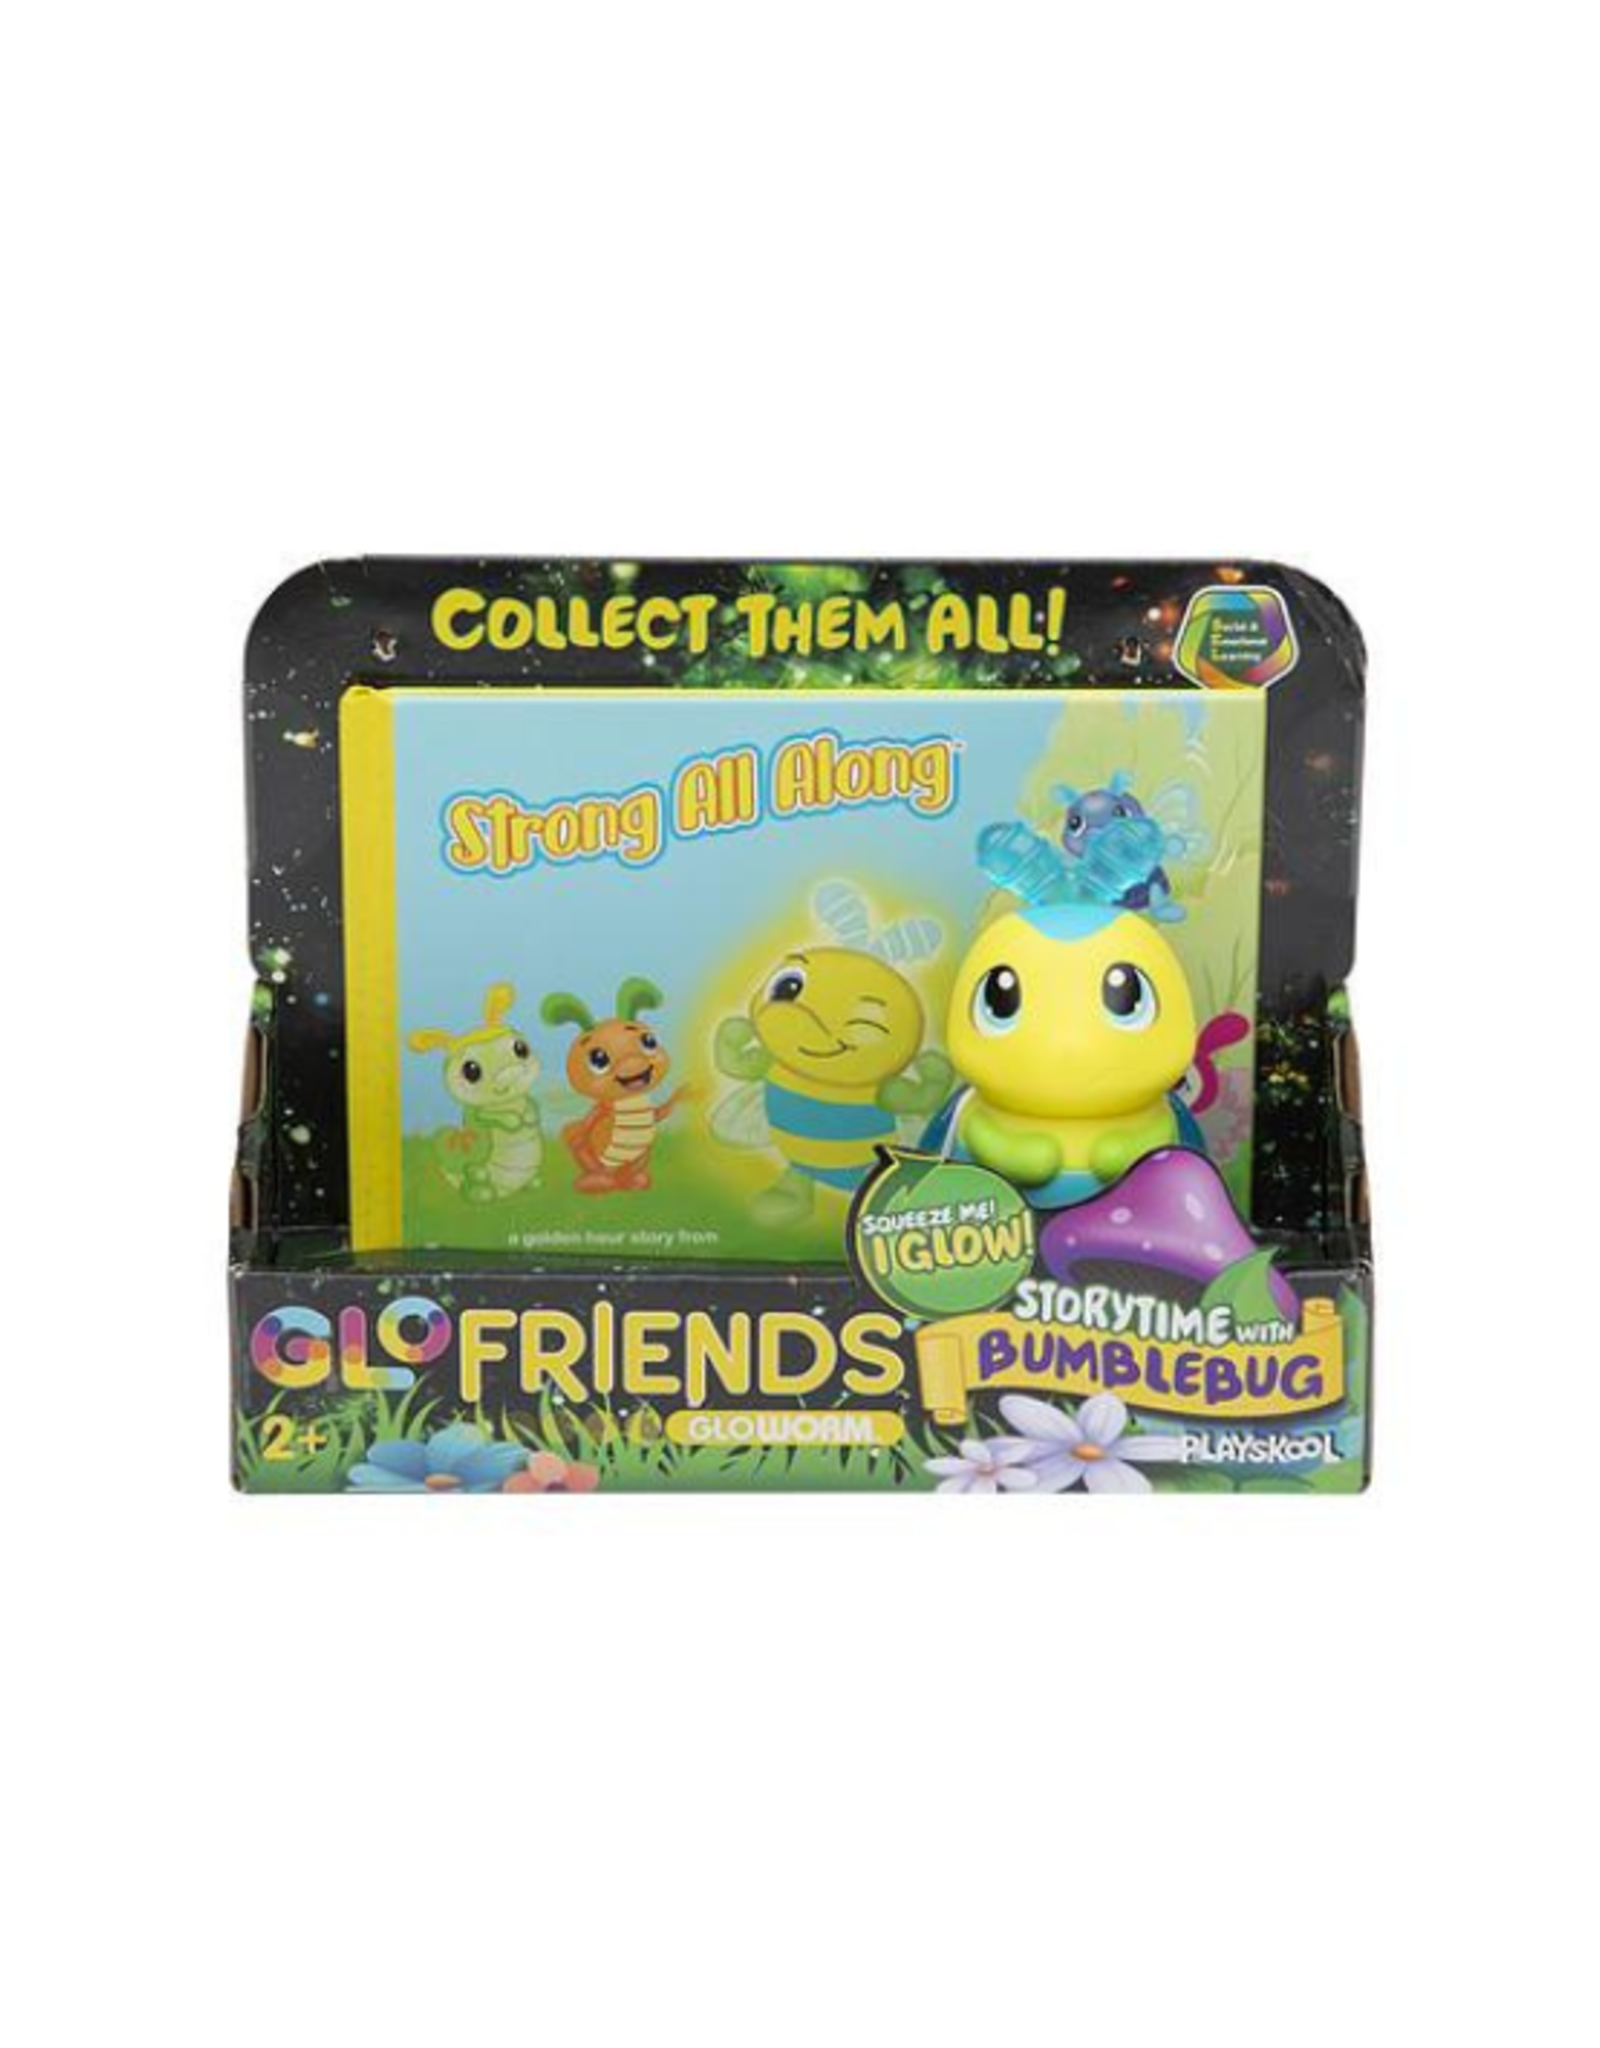 Playskool Playskool - Glo Friends Bumblebug Story Pack